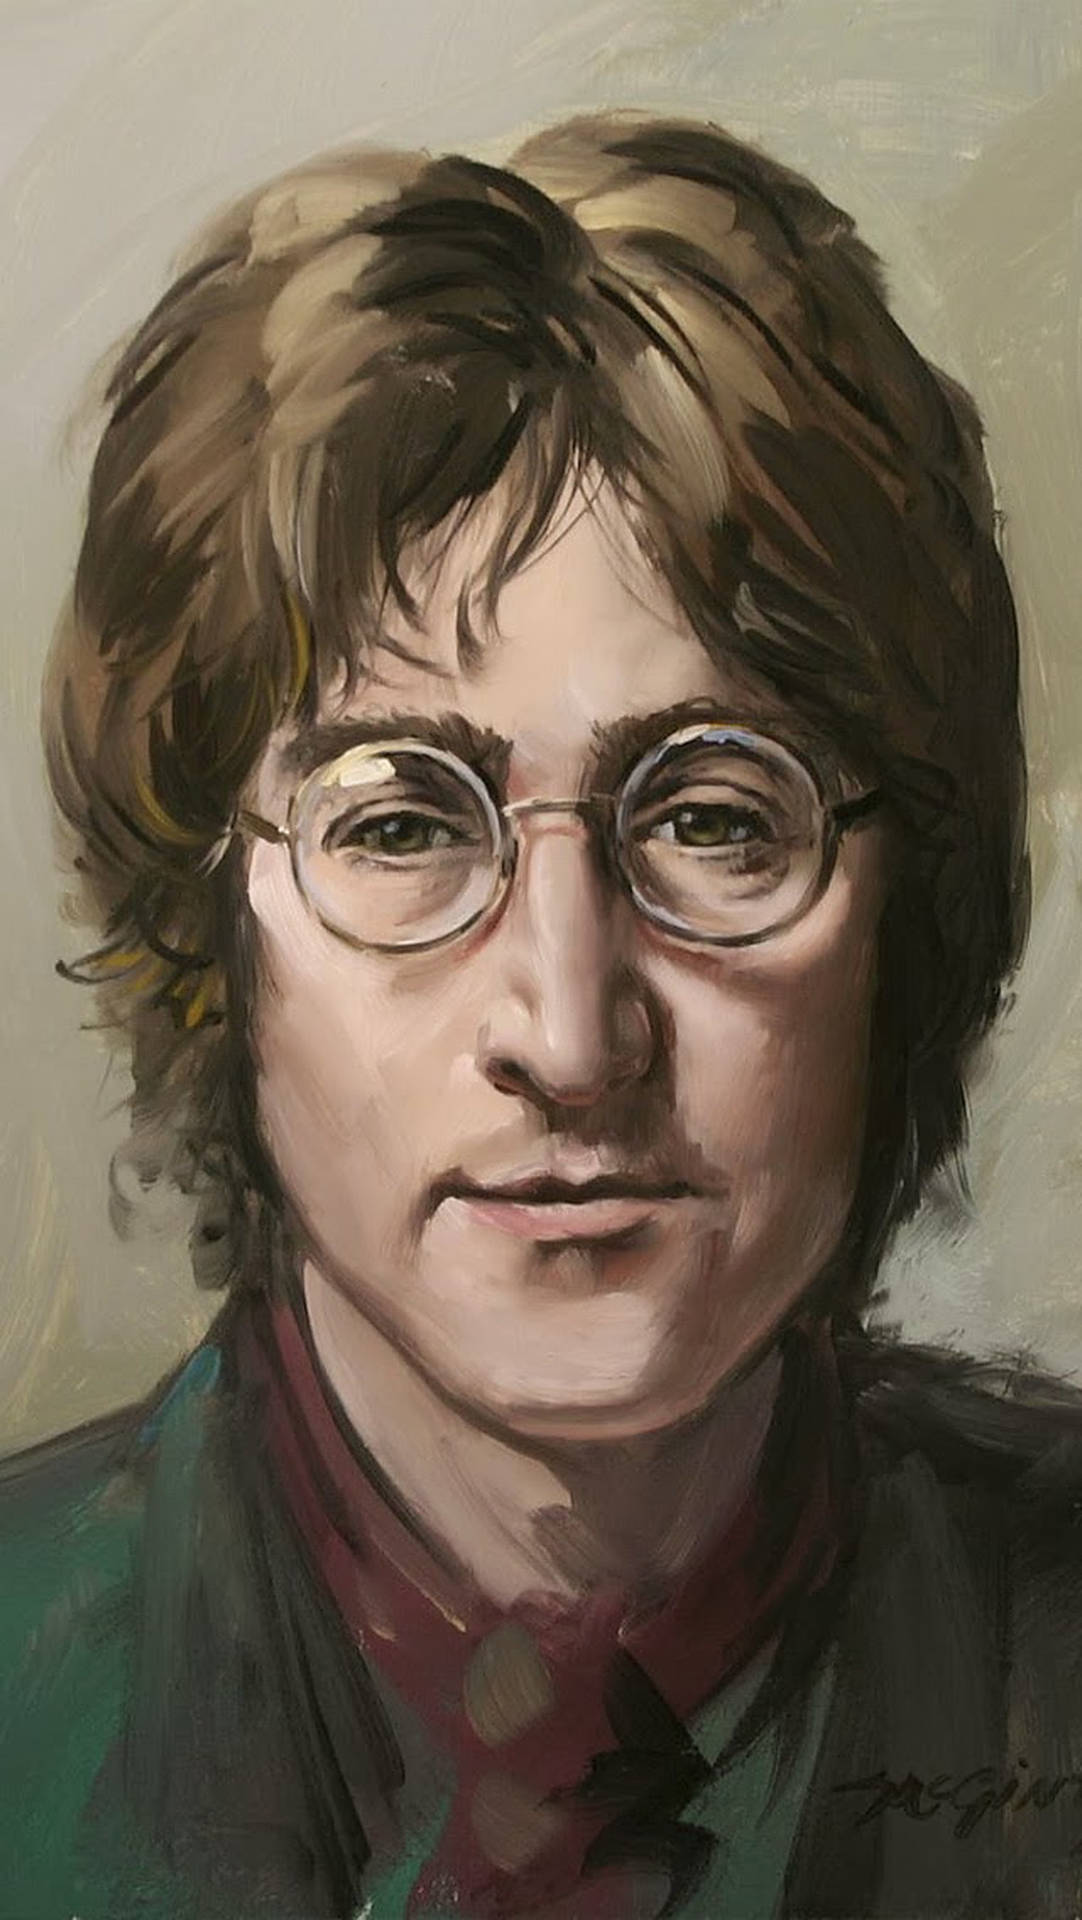 John Lennon Watercolor Painting Wallpaper